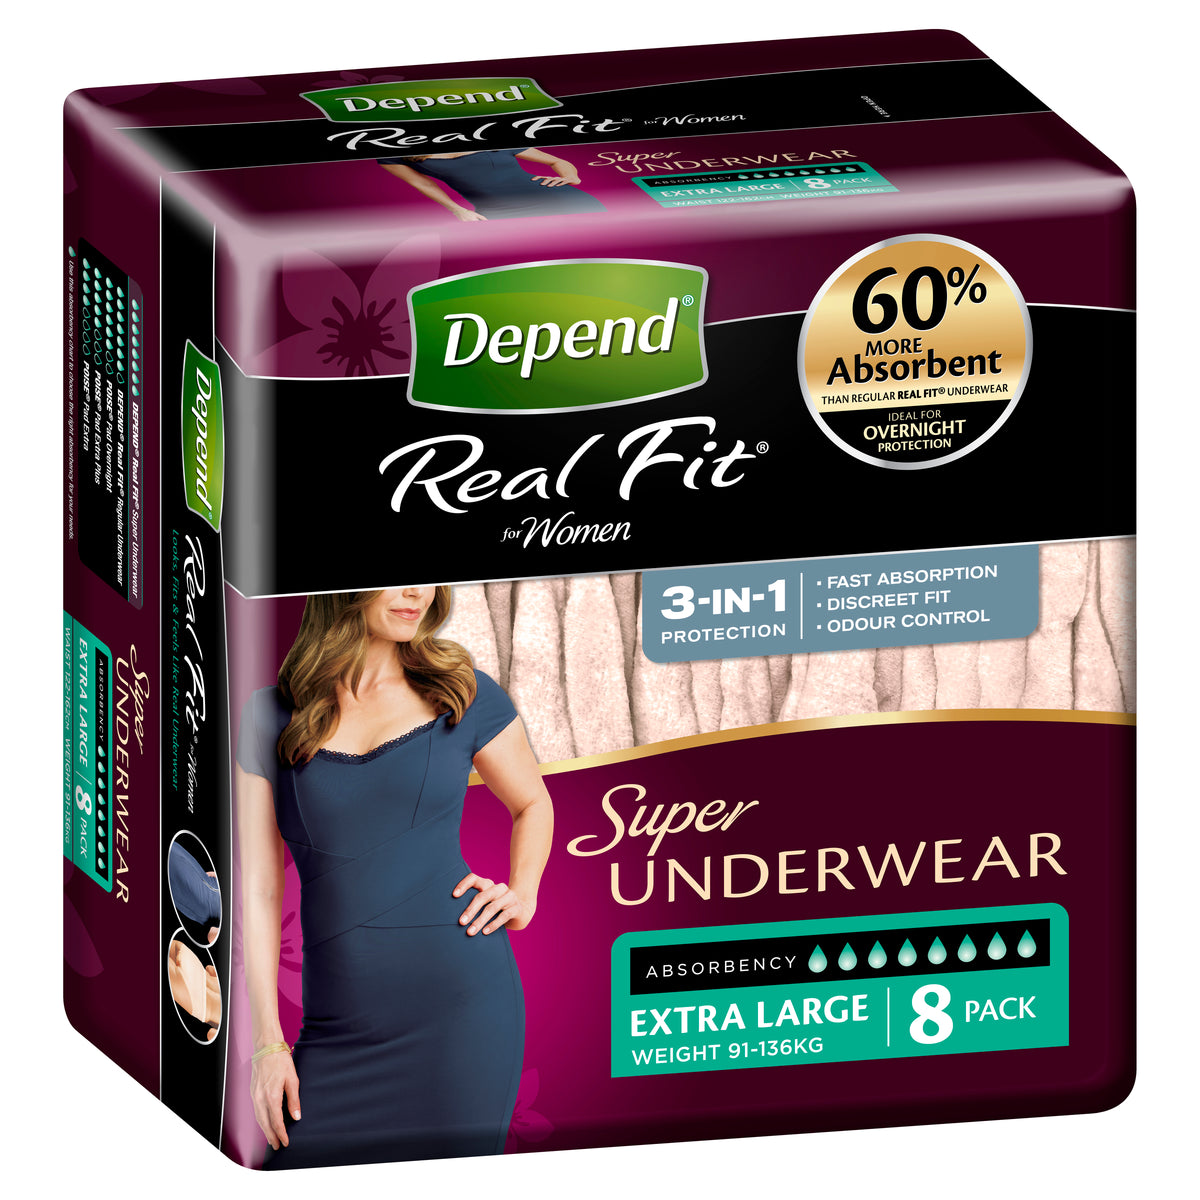 Depend Real Fit For Men Underwear, Heavy Absorbency, Large, 8 Pants